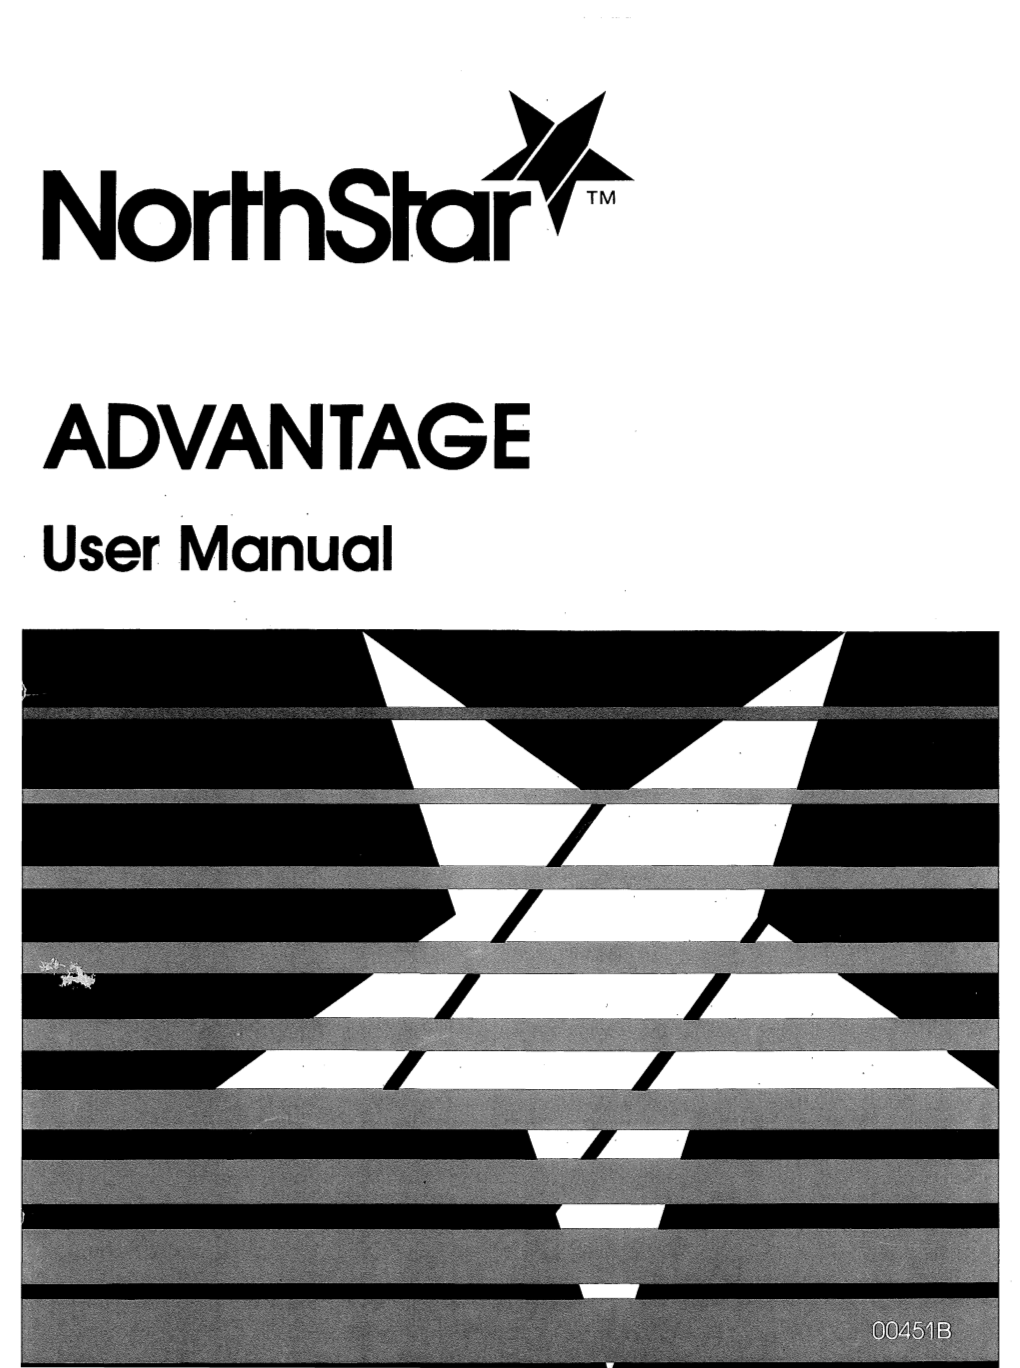 North Star Advantage User Manual